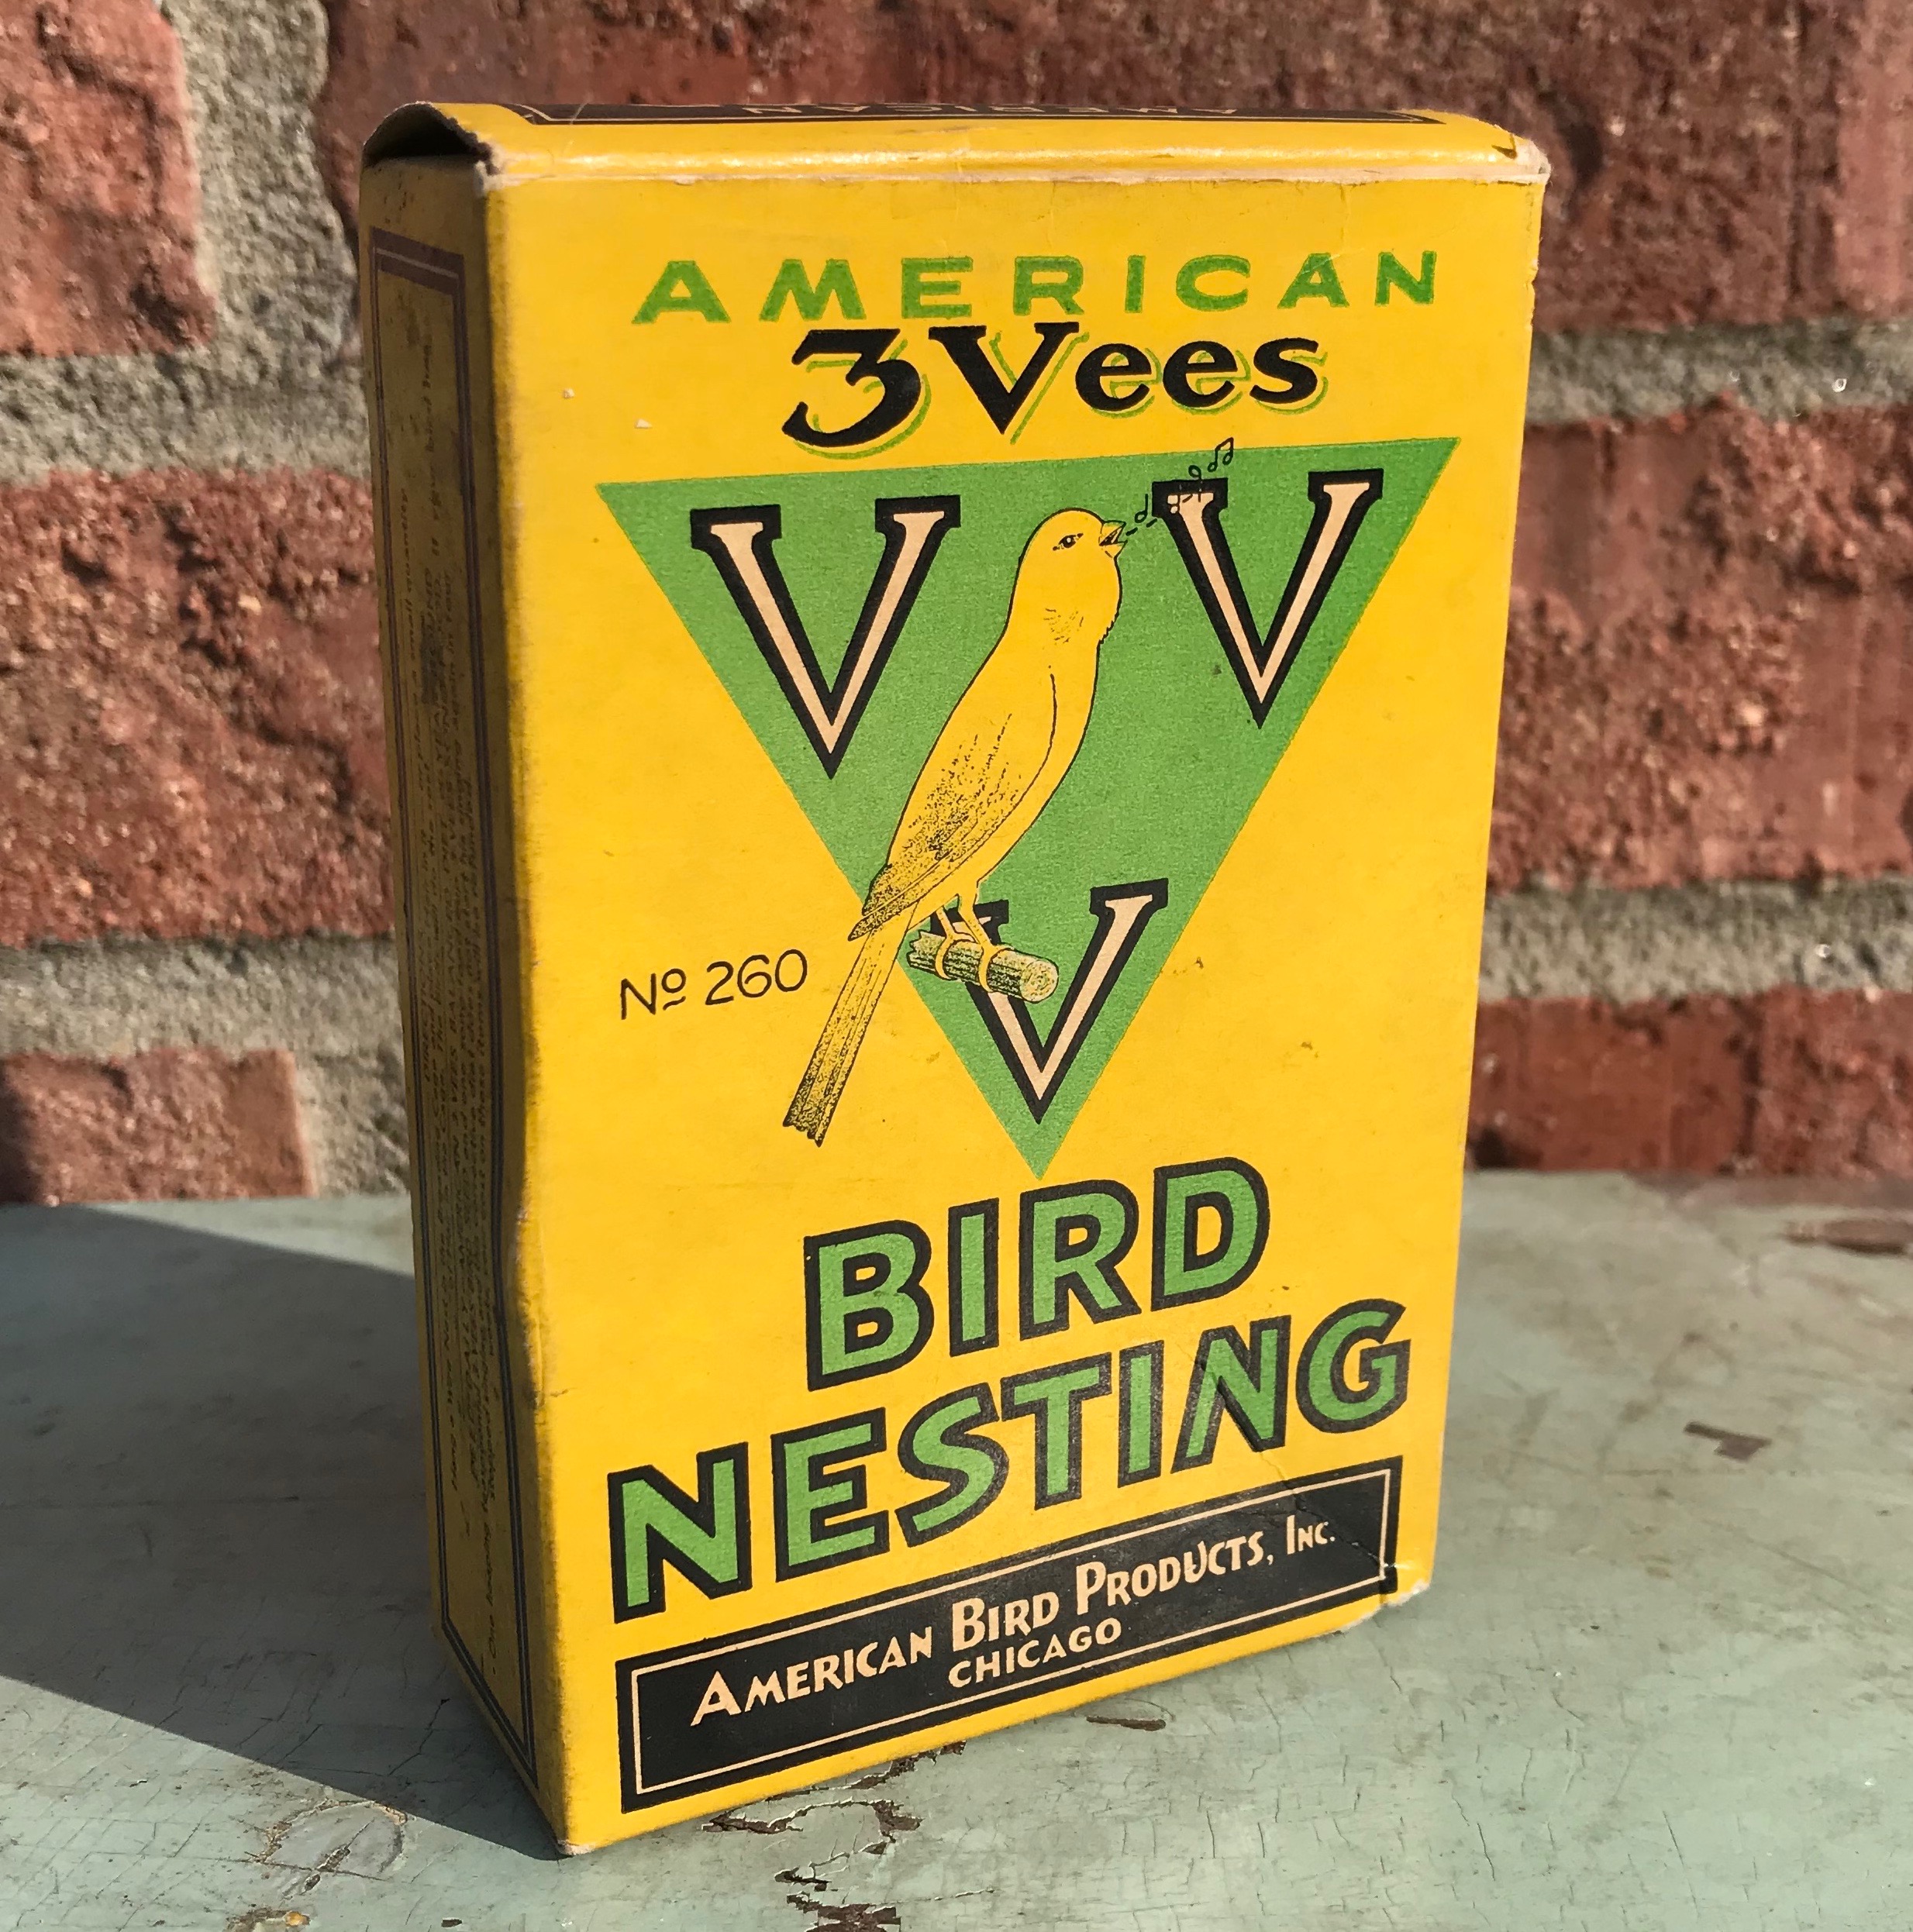 American Bird Products, Inc., est. 1926